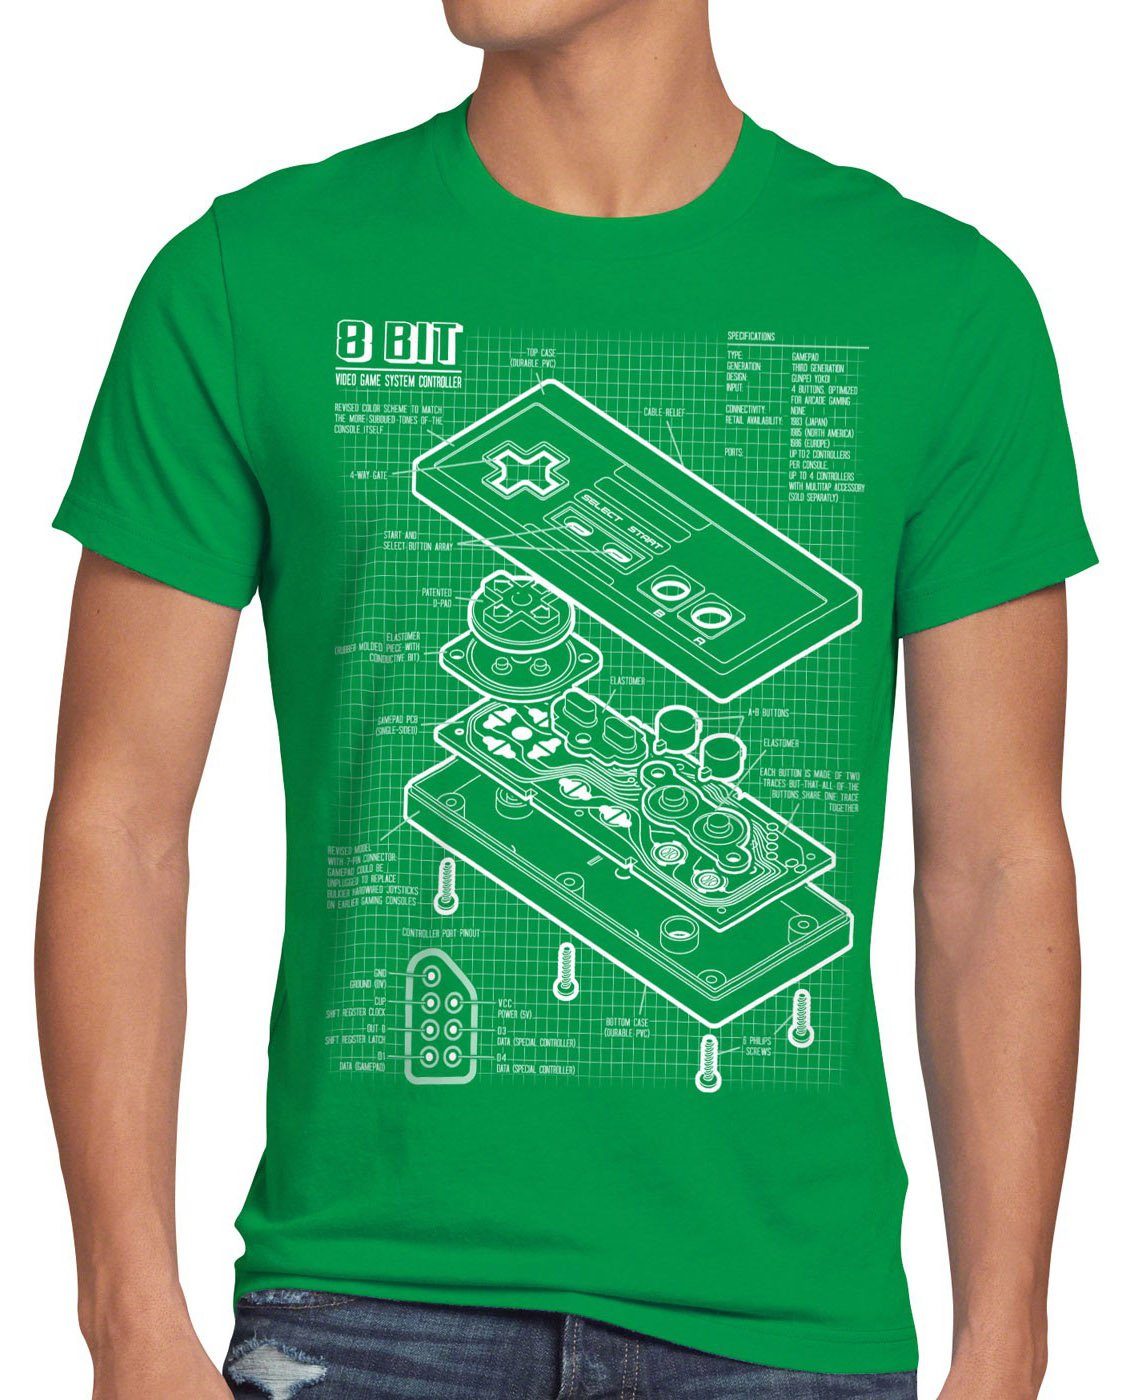 style3 Print-Shirt Herren T-Shirt n64 8-Bit Controller classic nintendo mario gamer NES zelda snes grün